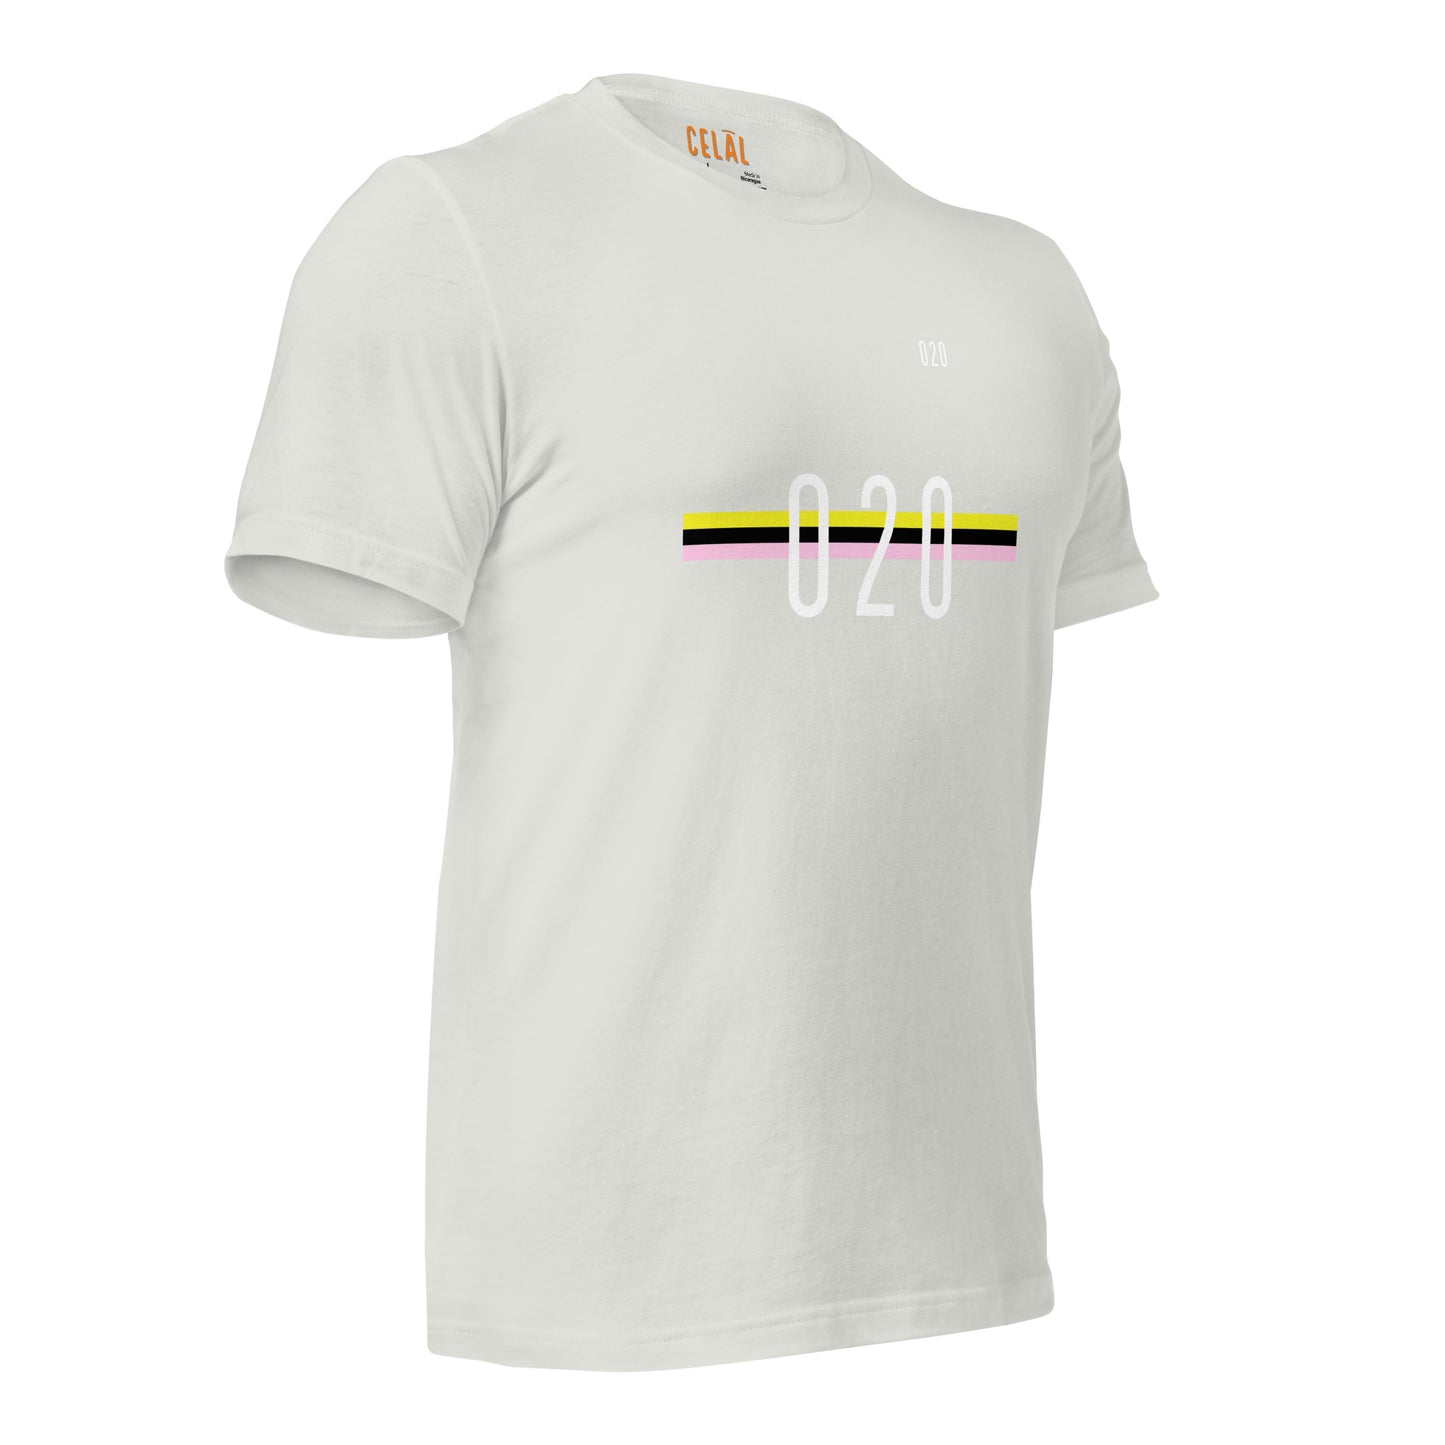 020 Unisex t-shirt